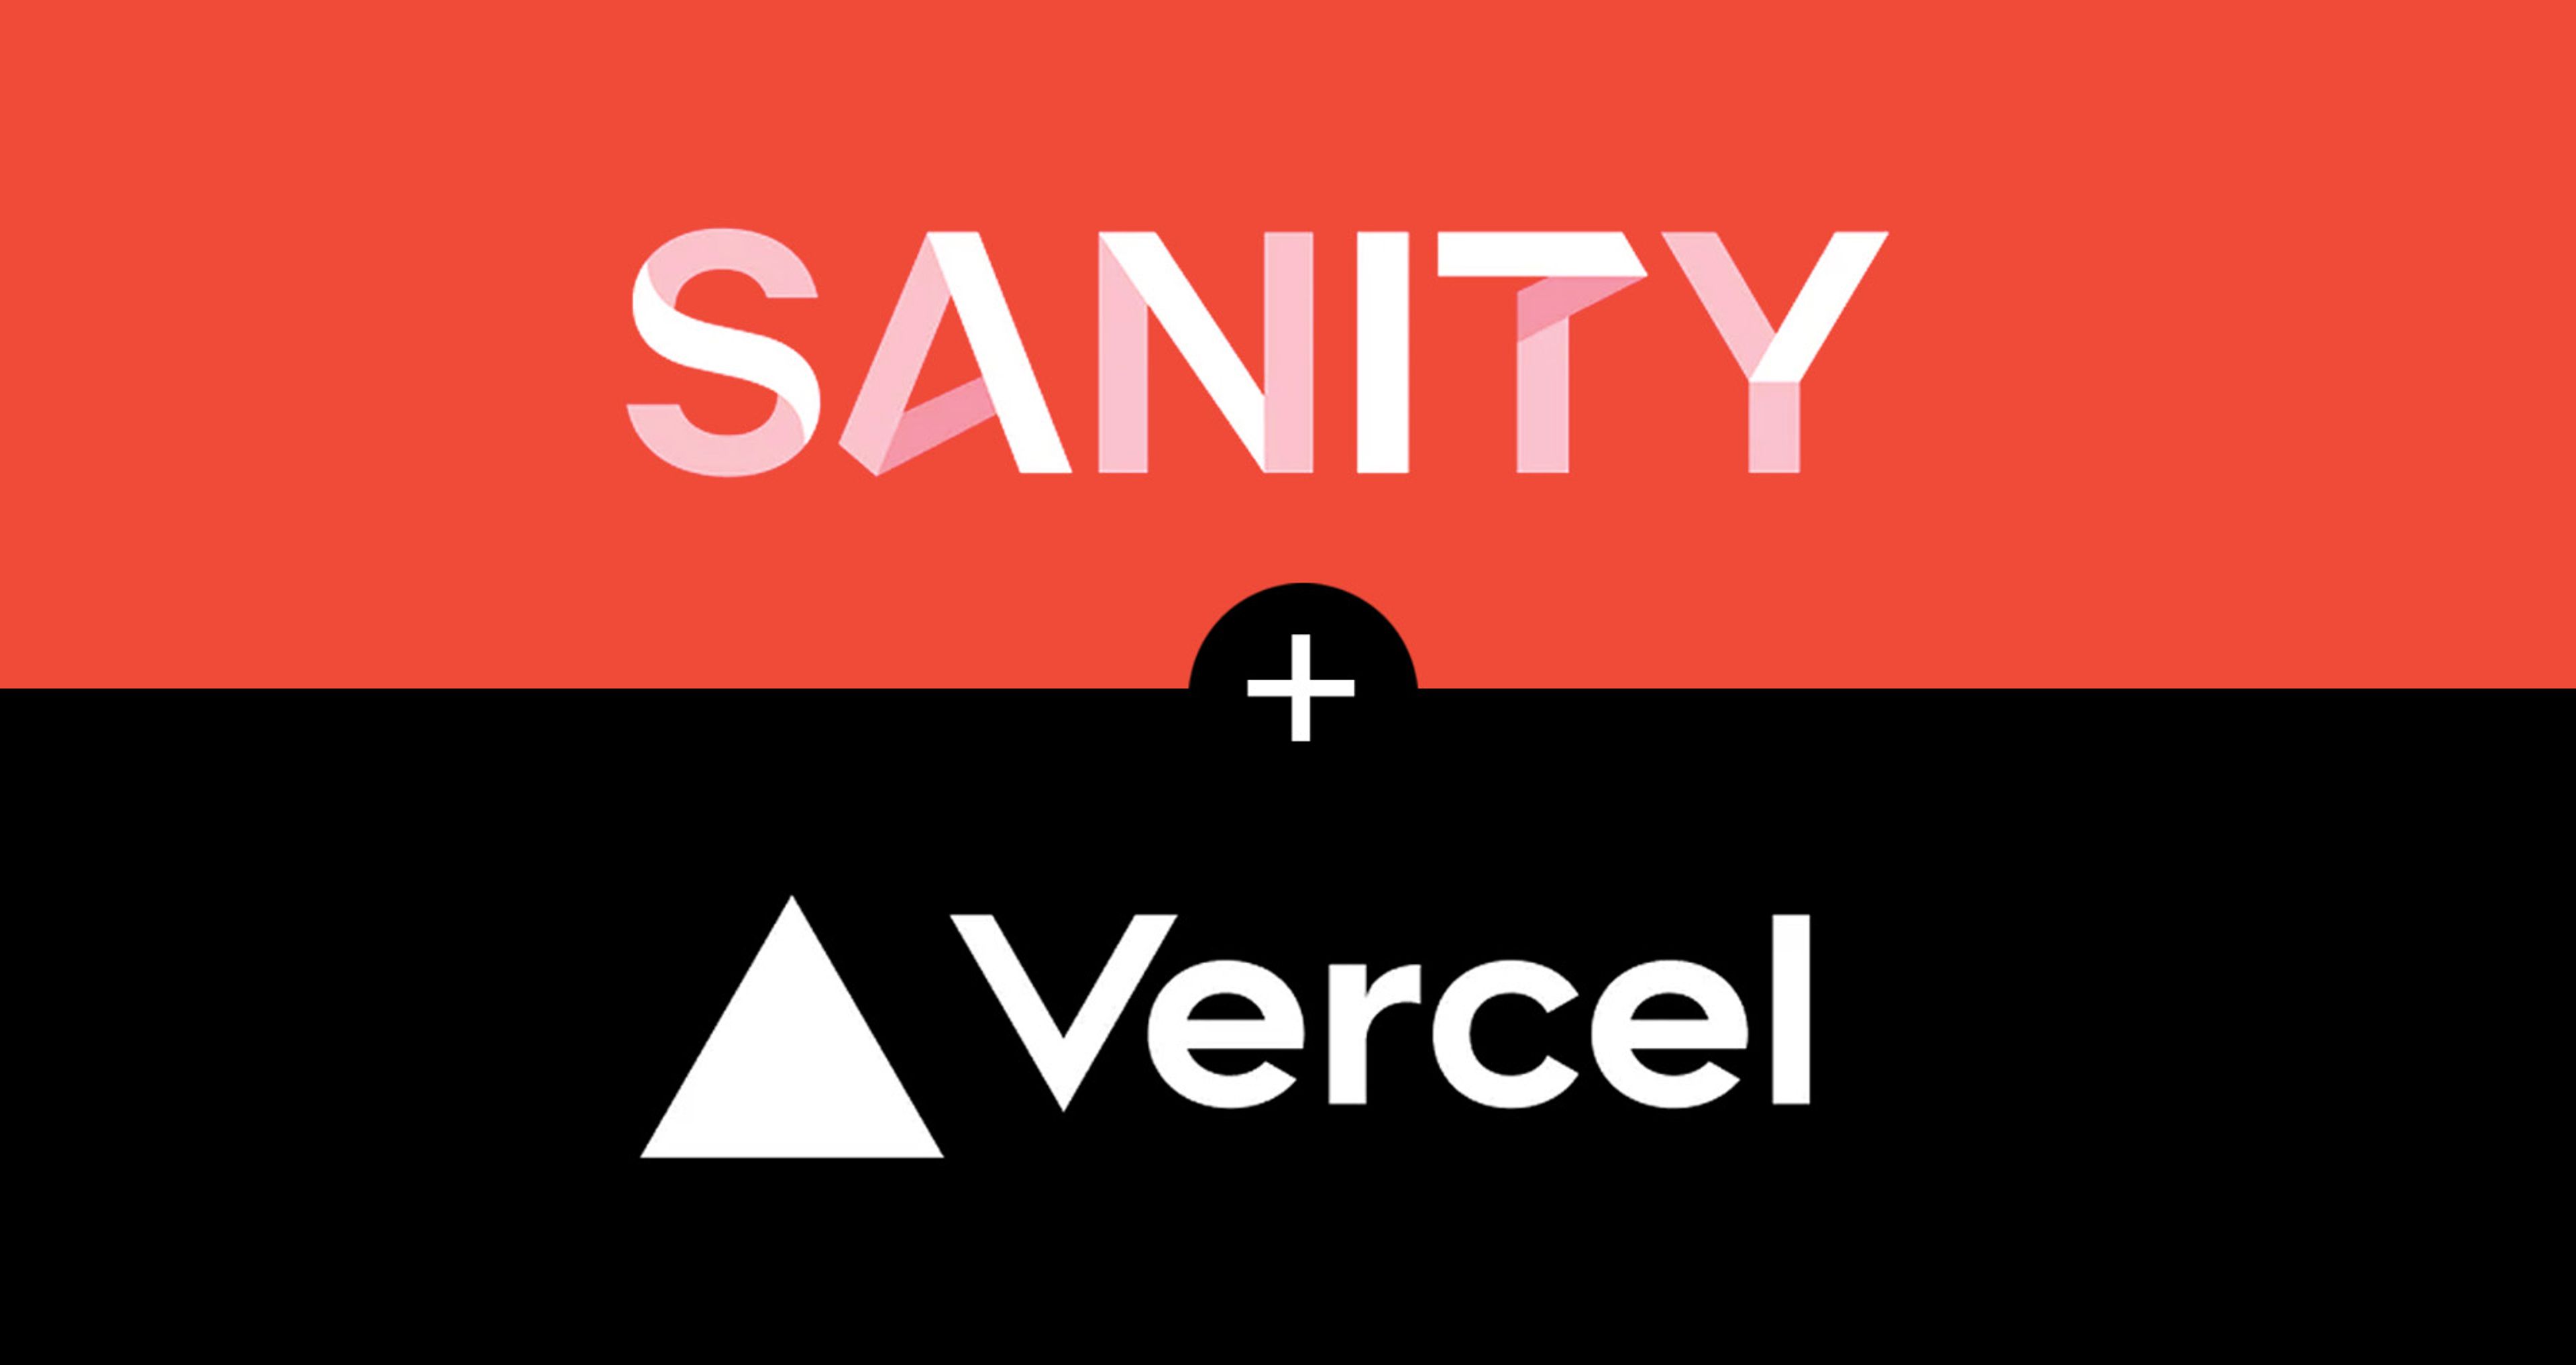 Sanity and Vercel logos